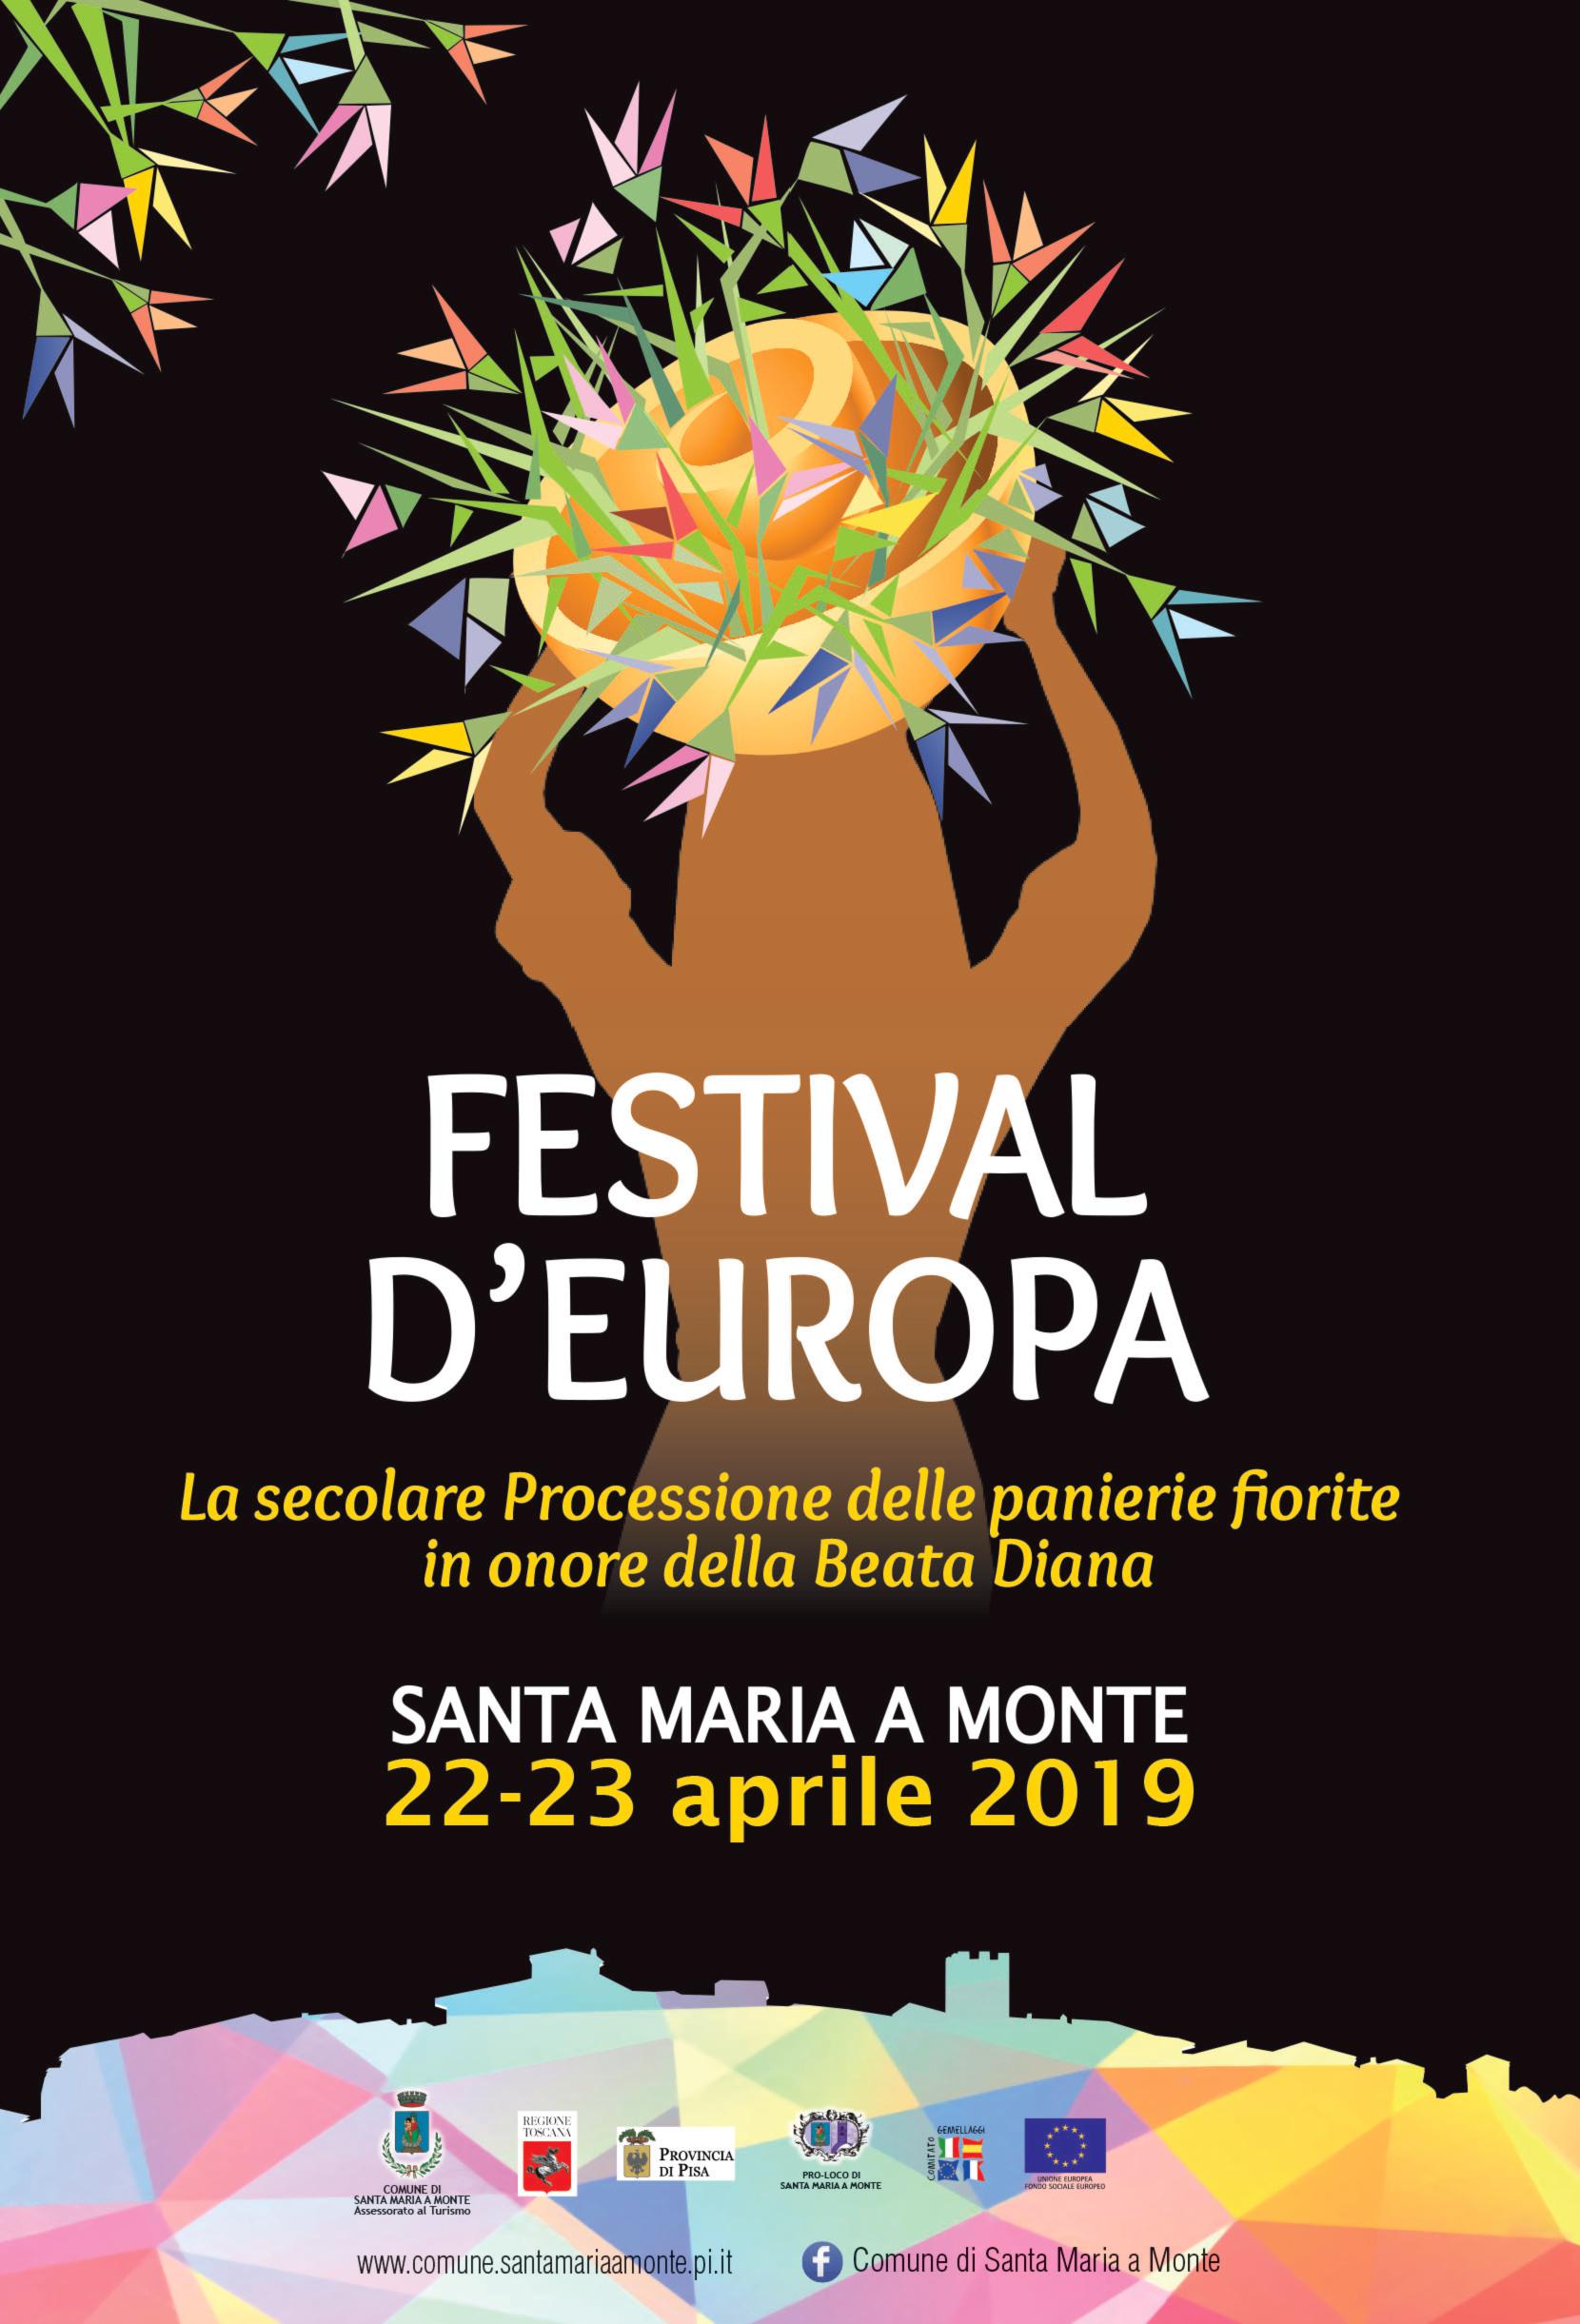 Festival d'Europa 2019 - Lunedì 22 e Martedì 23 Aprile